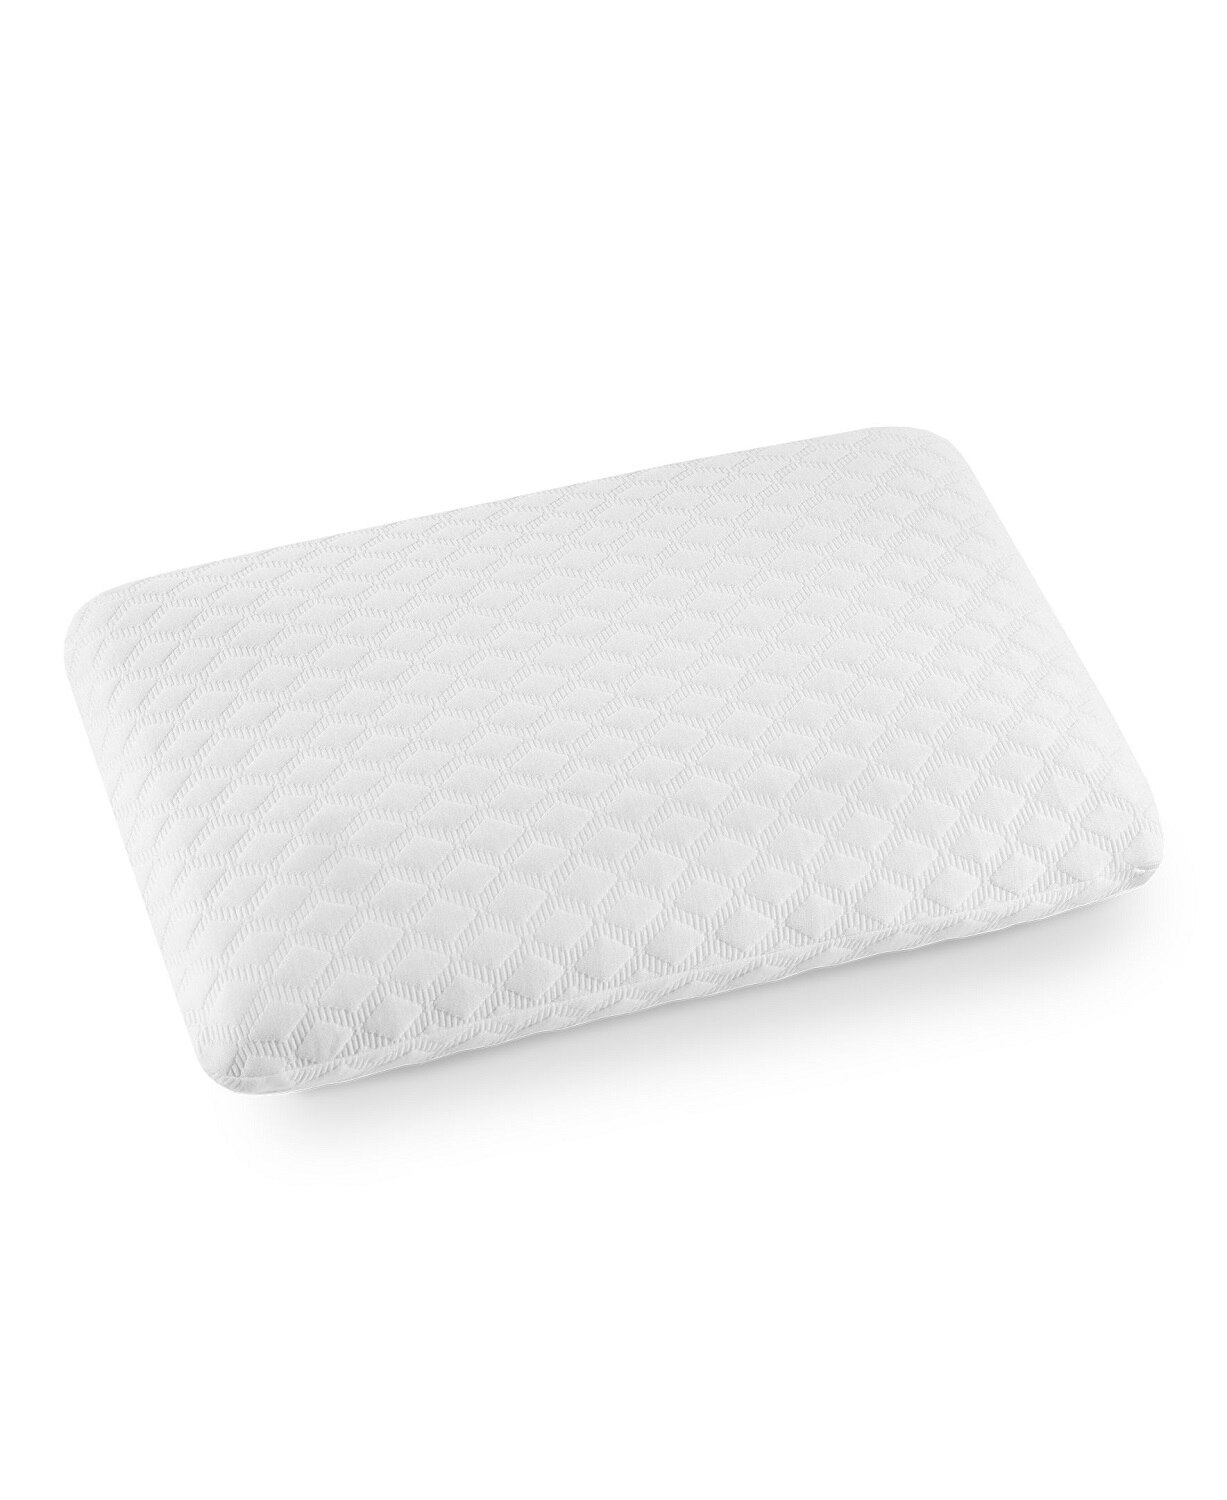 MagnaCOMFORT by Therapedic Classic Comfort Memory Foam Pillow - Standard Size